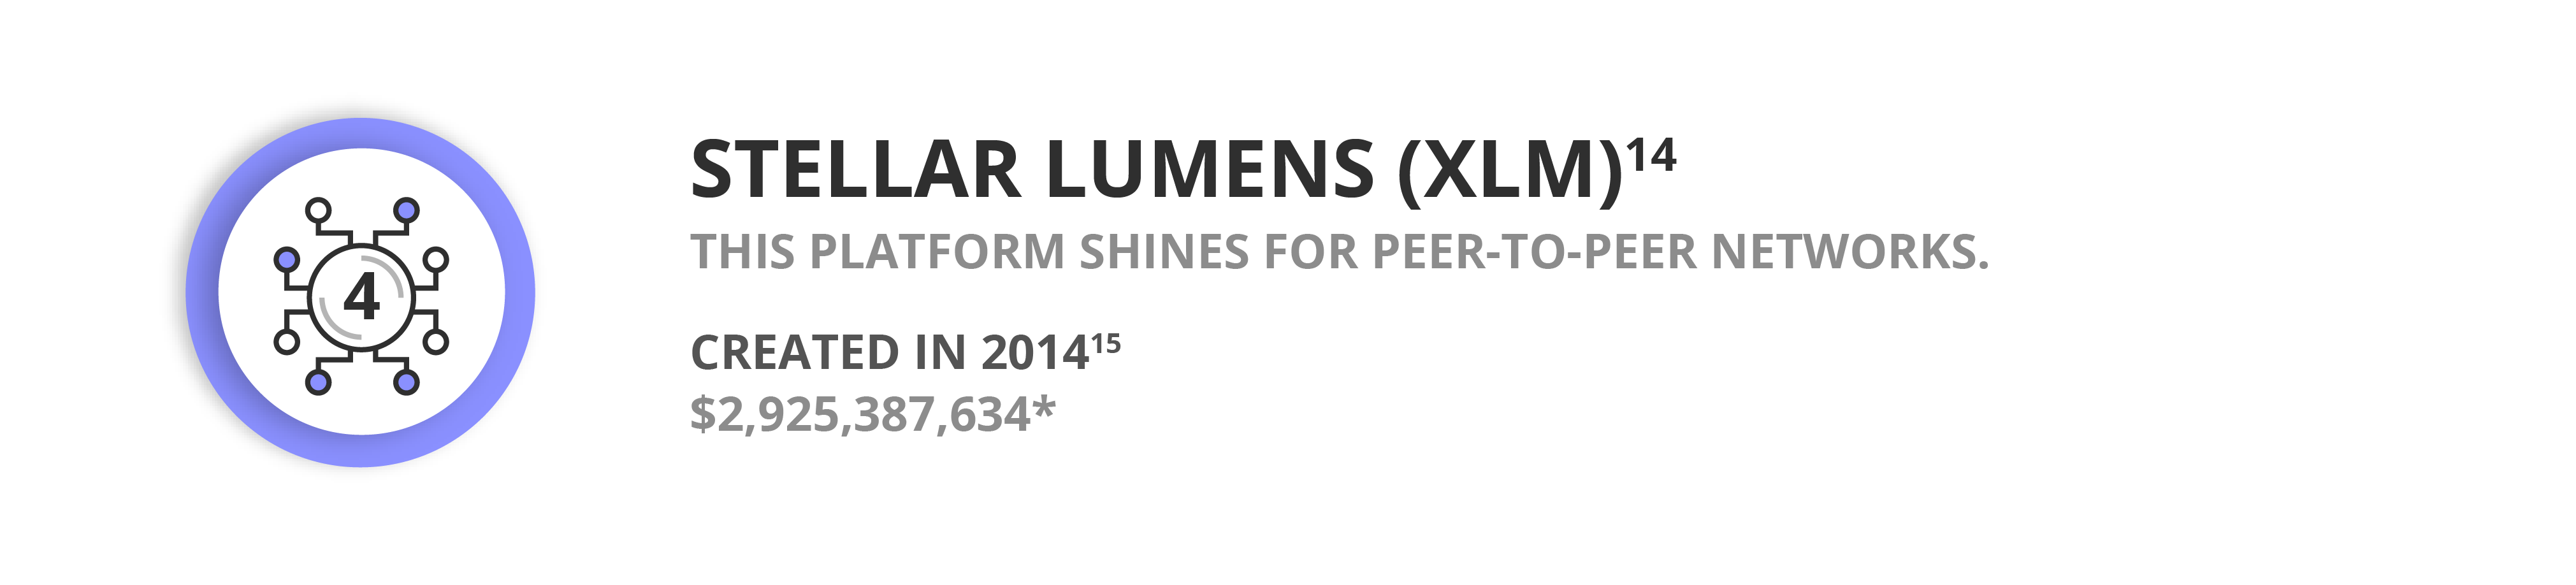 Stellar Lumens (XLM). This platform shines for peer-to-peer networks